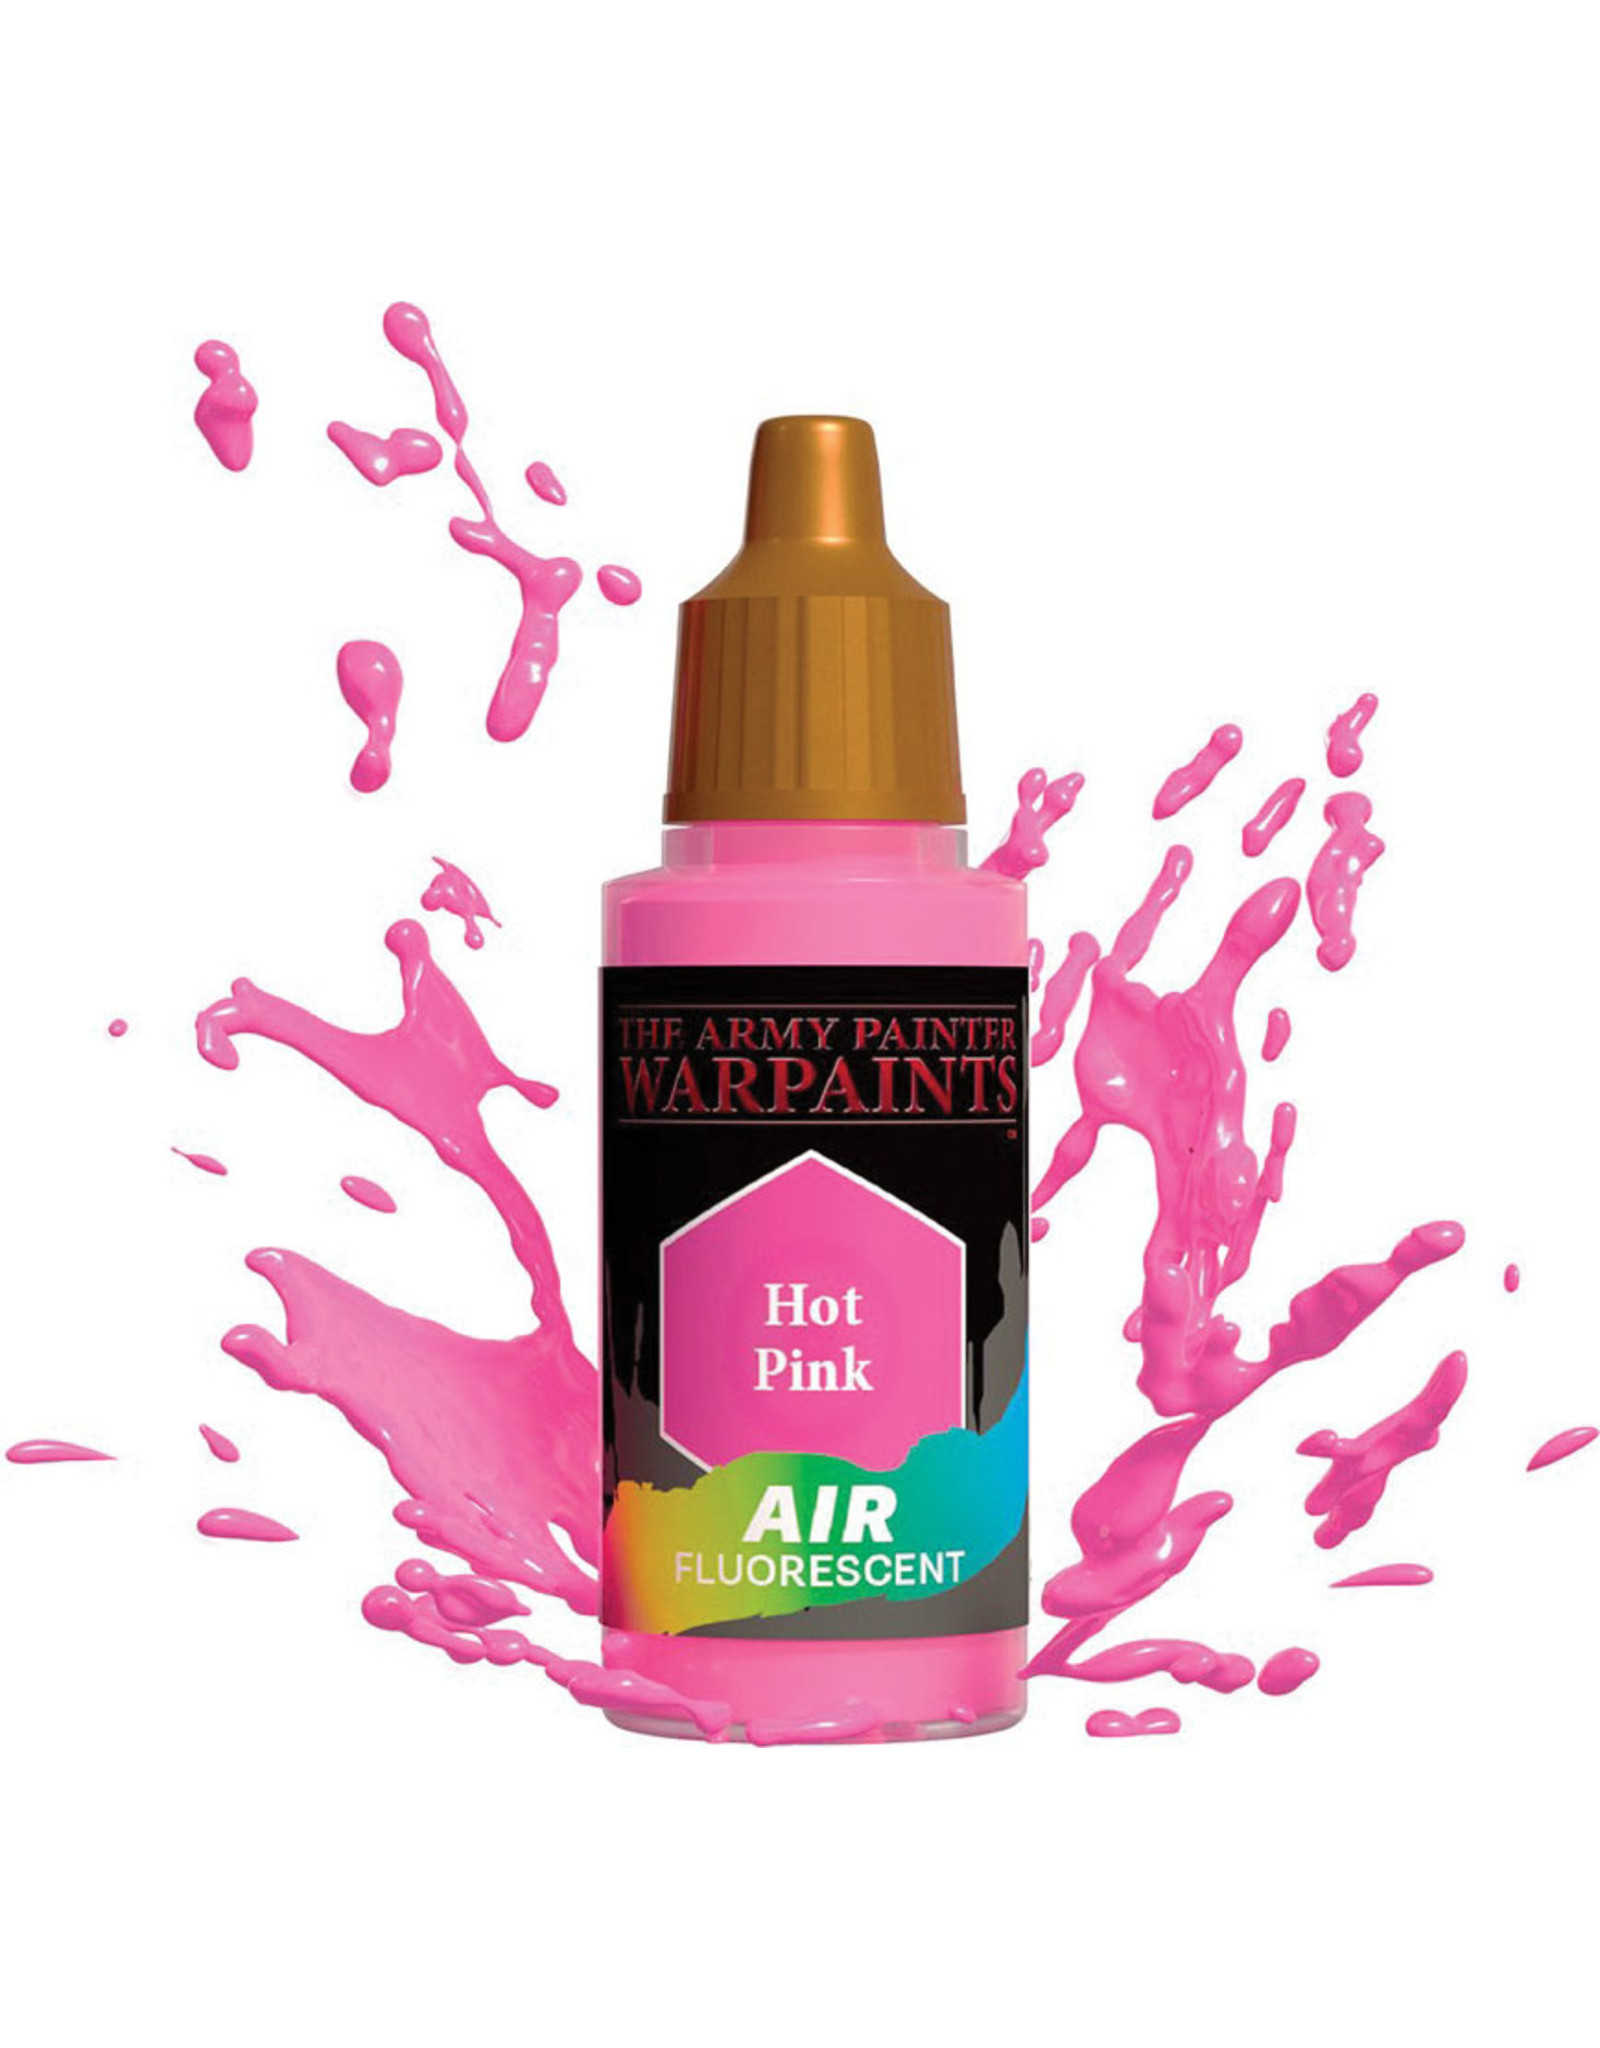 Army Painter Warpaint Air: Flourescent- Hot Pink, 18ml.